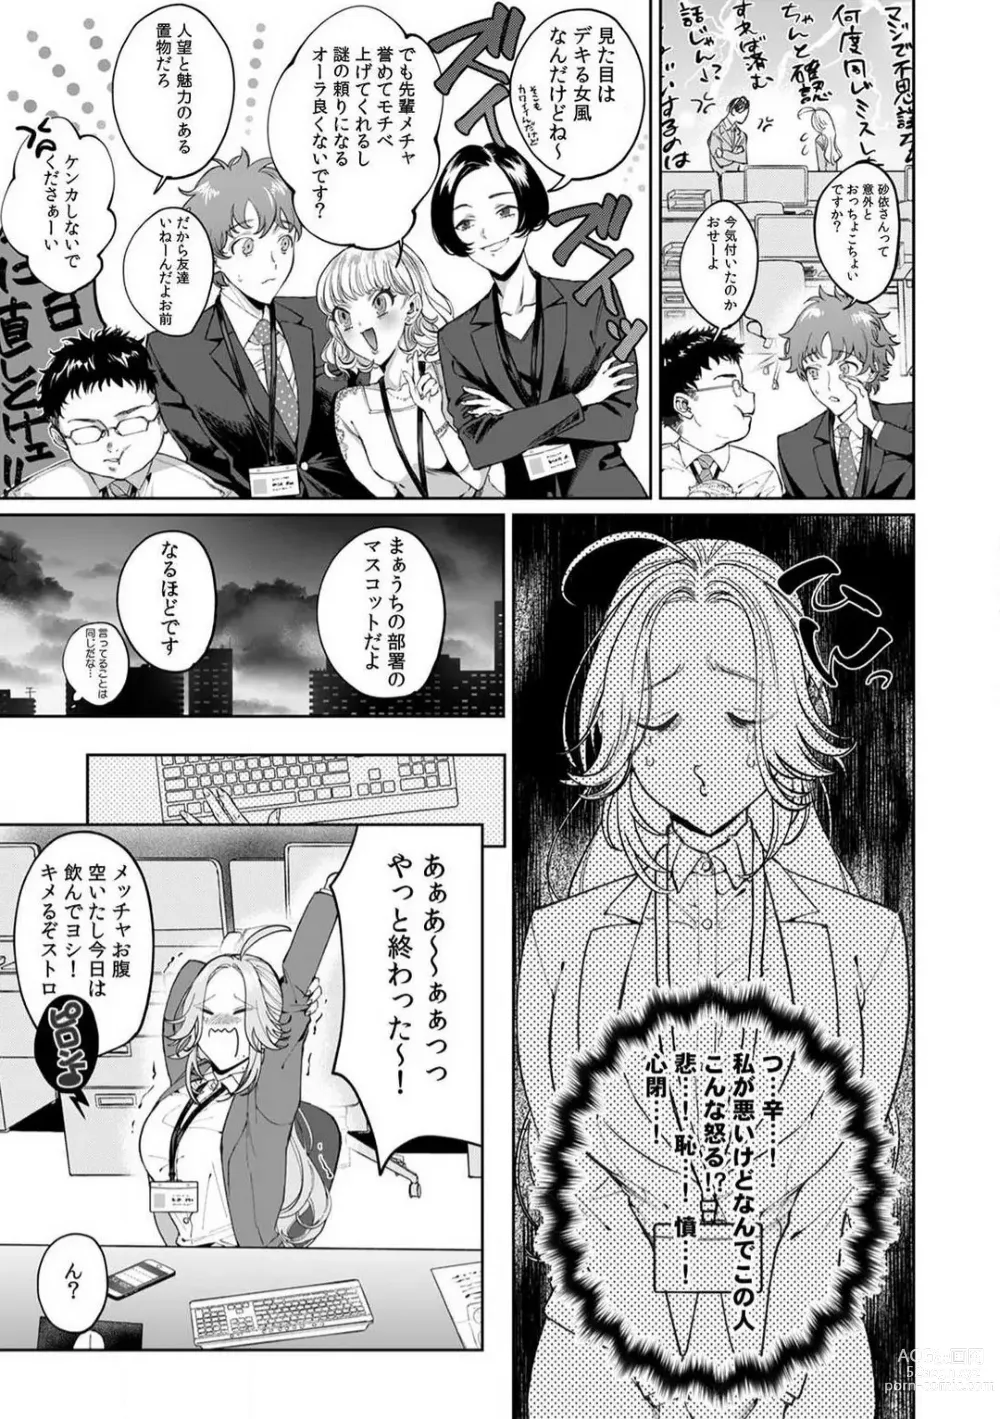 Page 8 of manga Kuzudakedo... Dekiai. Osananajimi no Honki ga Yabai 1-6